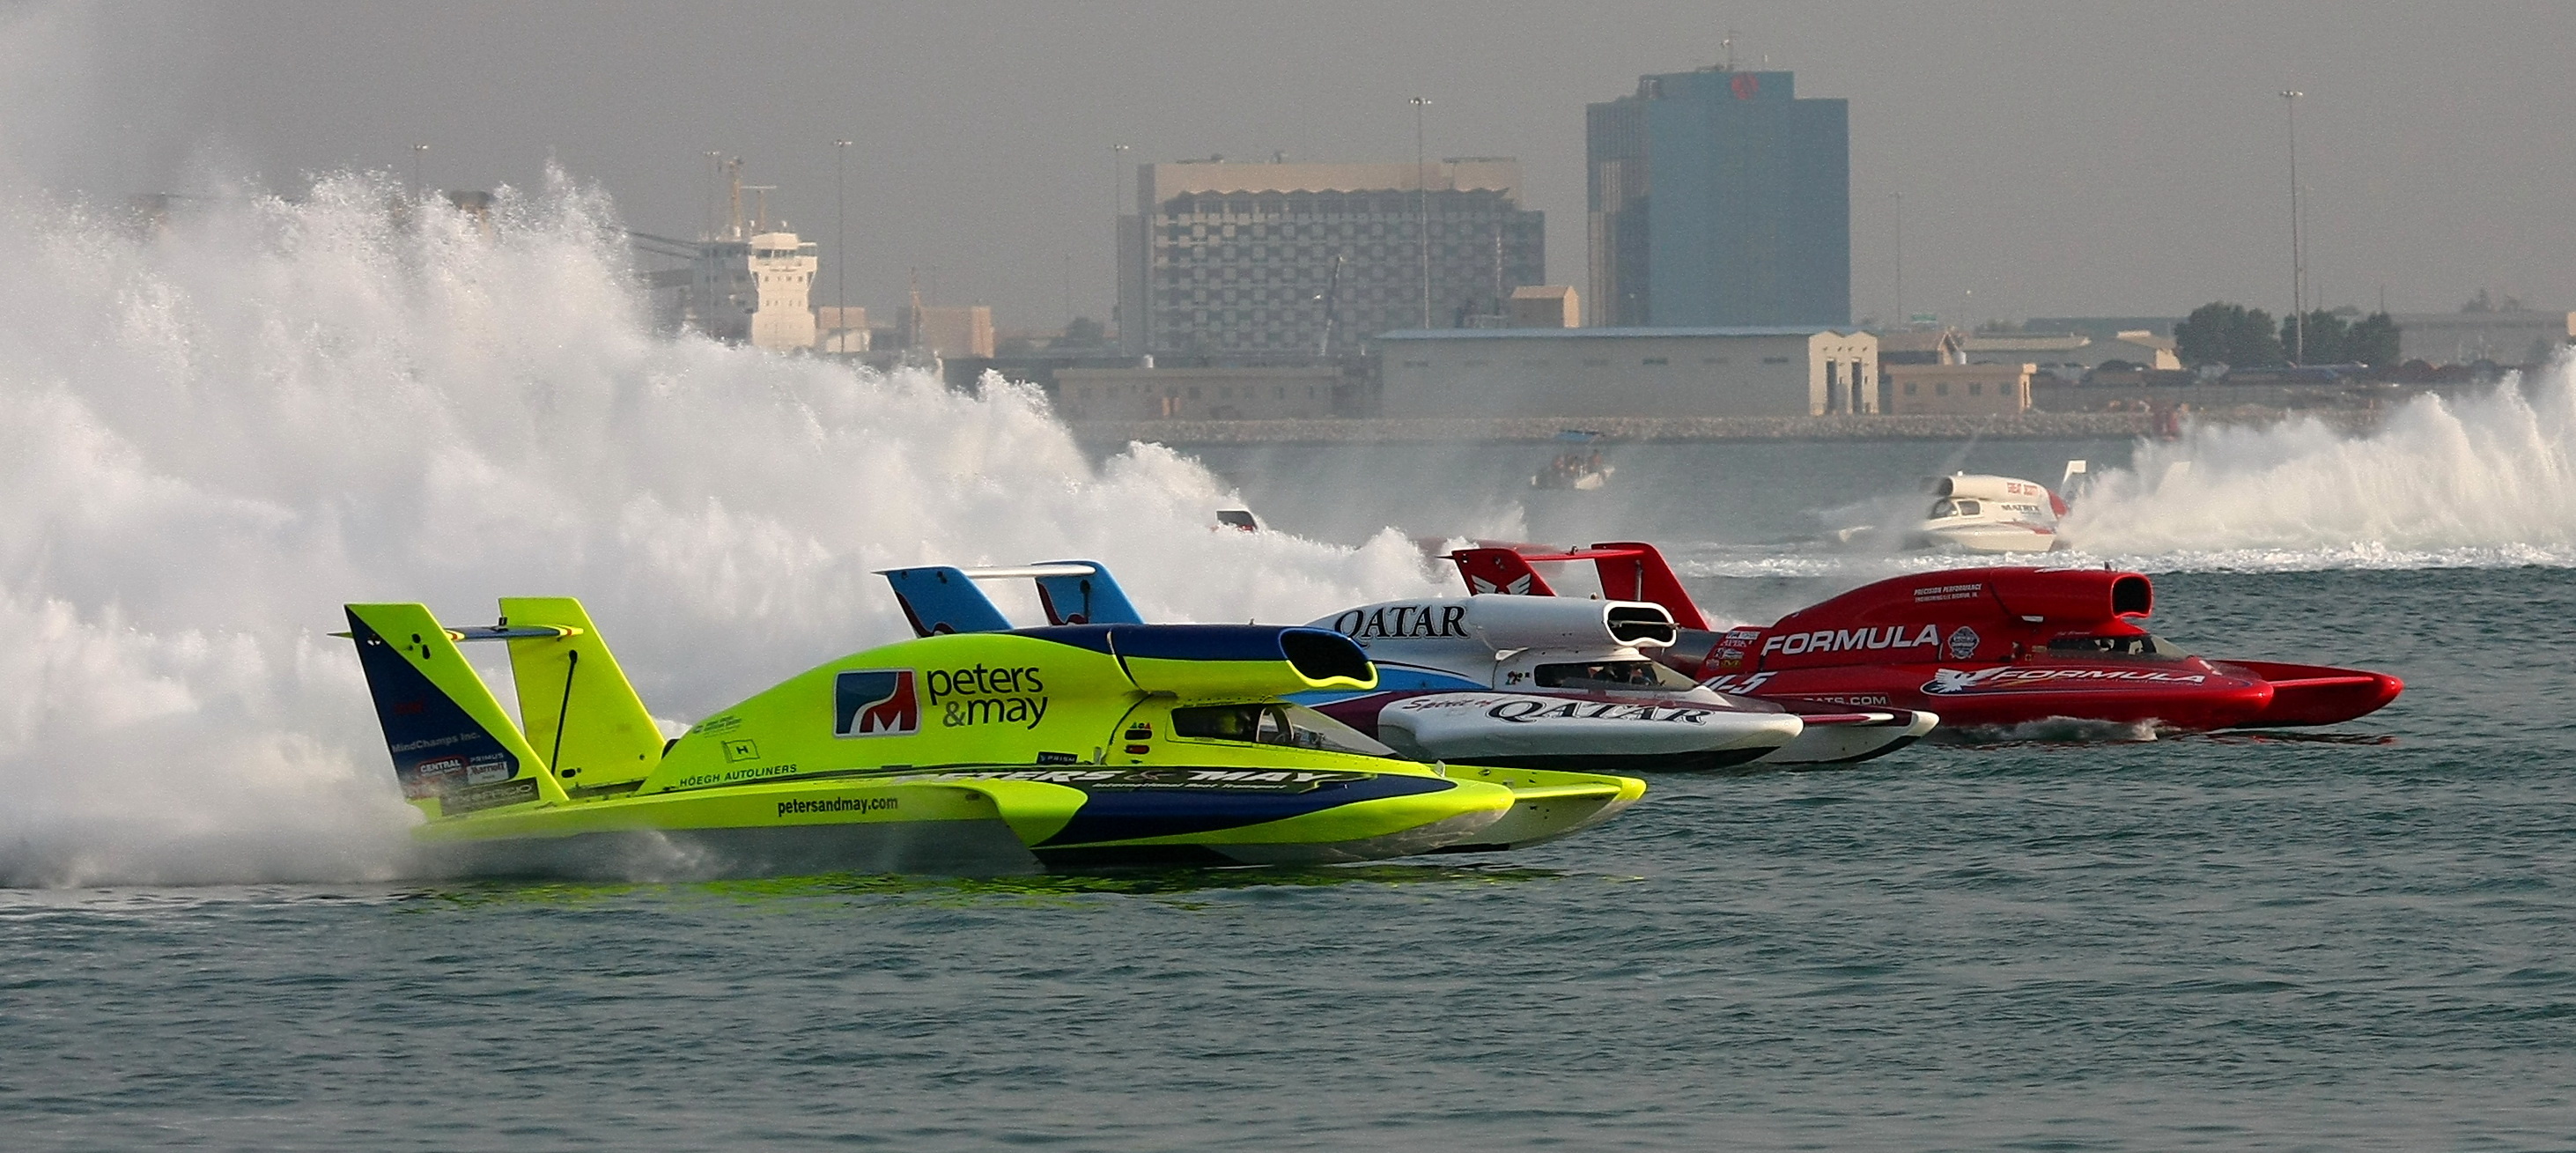 Hydroplane: Racing jet boats on river, Hot Rod ship, Watercraft. 2930x1310 Dual Screen Wallpaper.